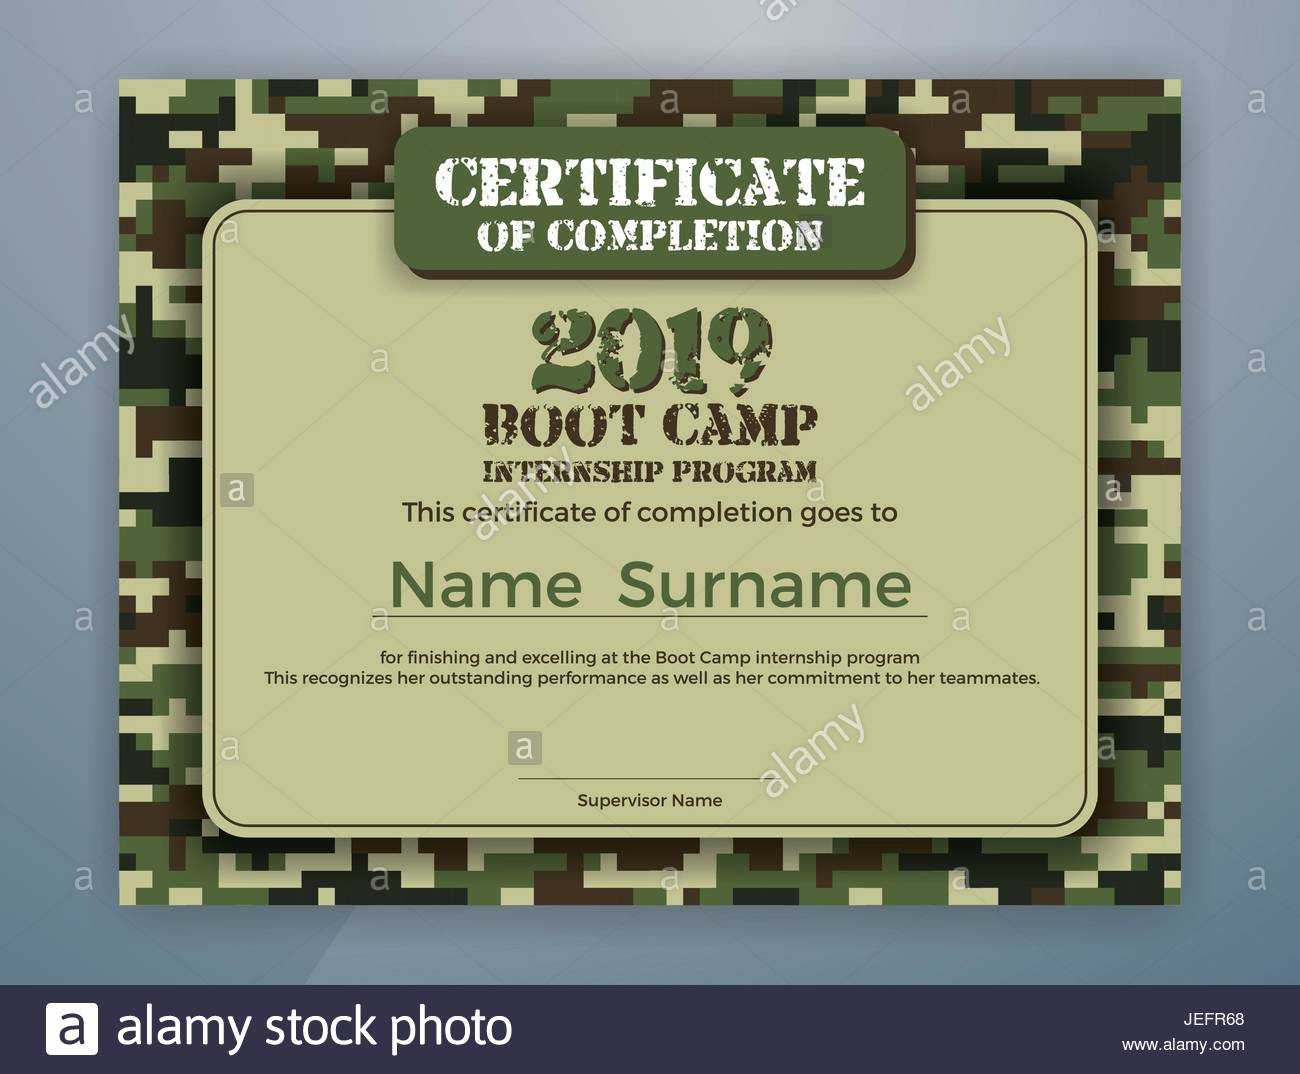 Boot Camp Internship Program Certificate Template Design Intended For Boot Camp Certificate Template